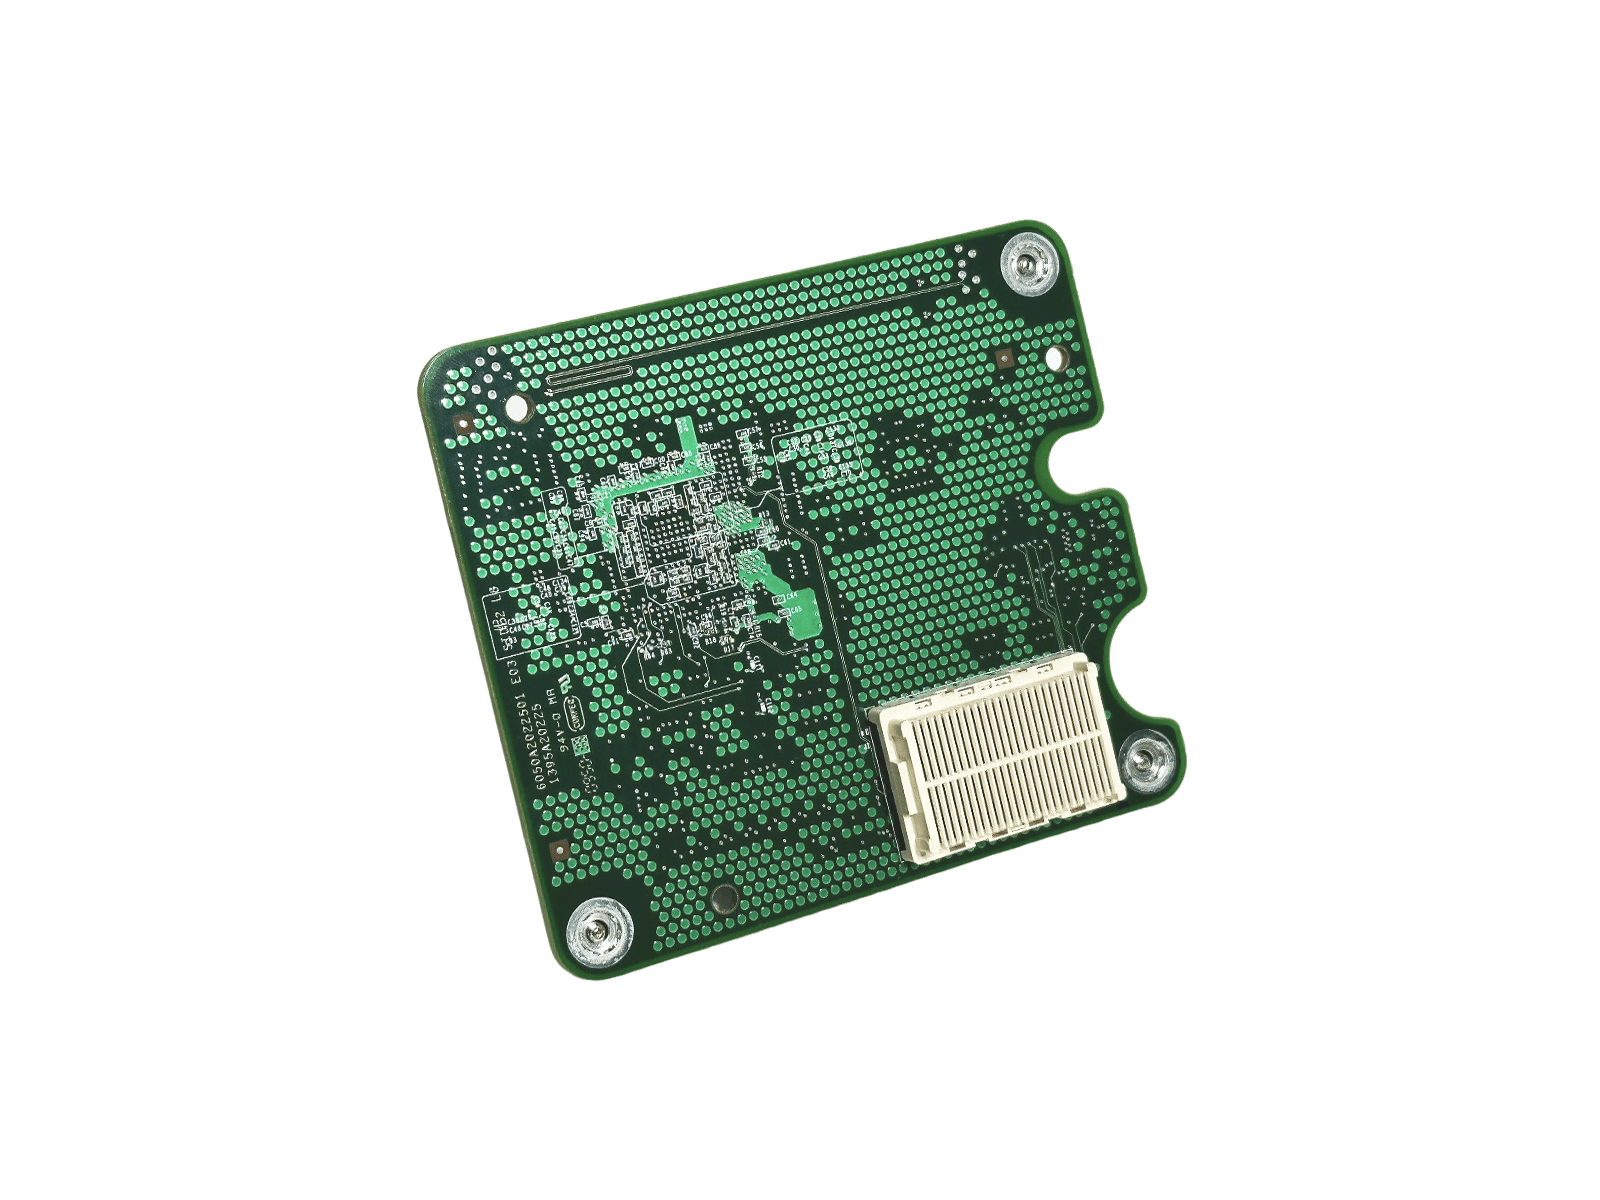 HP 404984-001 Broadcom 5715 1GbE Dual Port PCIe Mezzanine NC326m Network Interface Card.